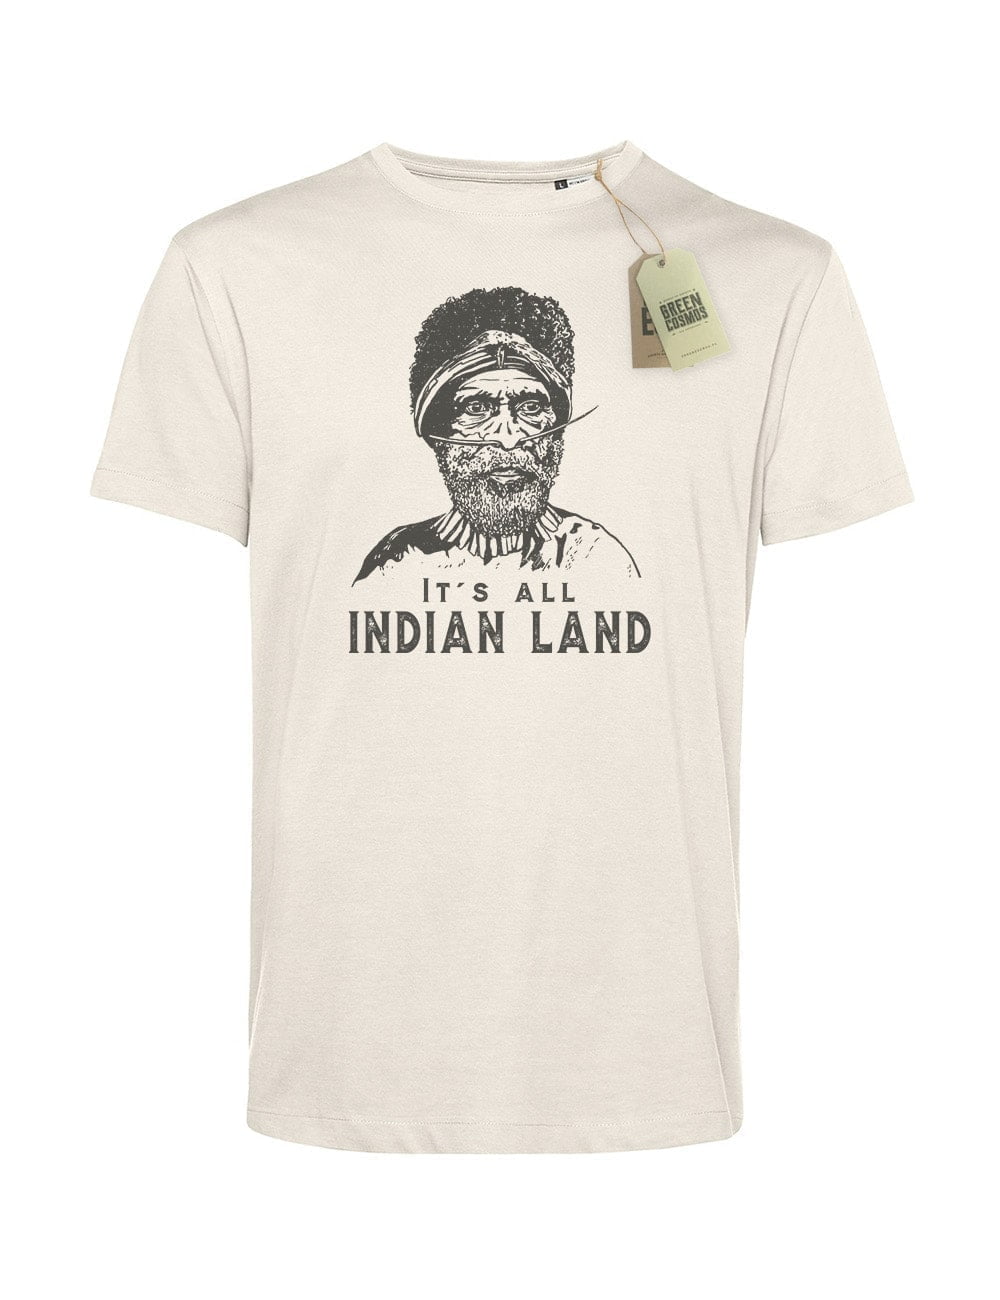 INDIAN LAND koszulka męska (Kopia)